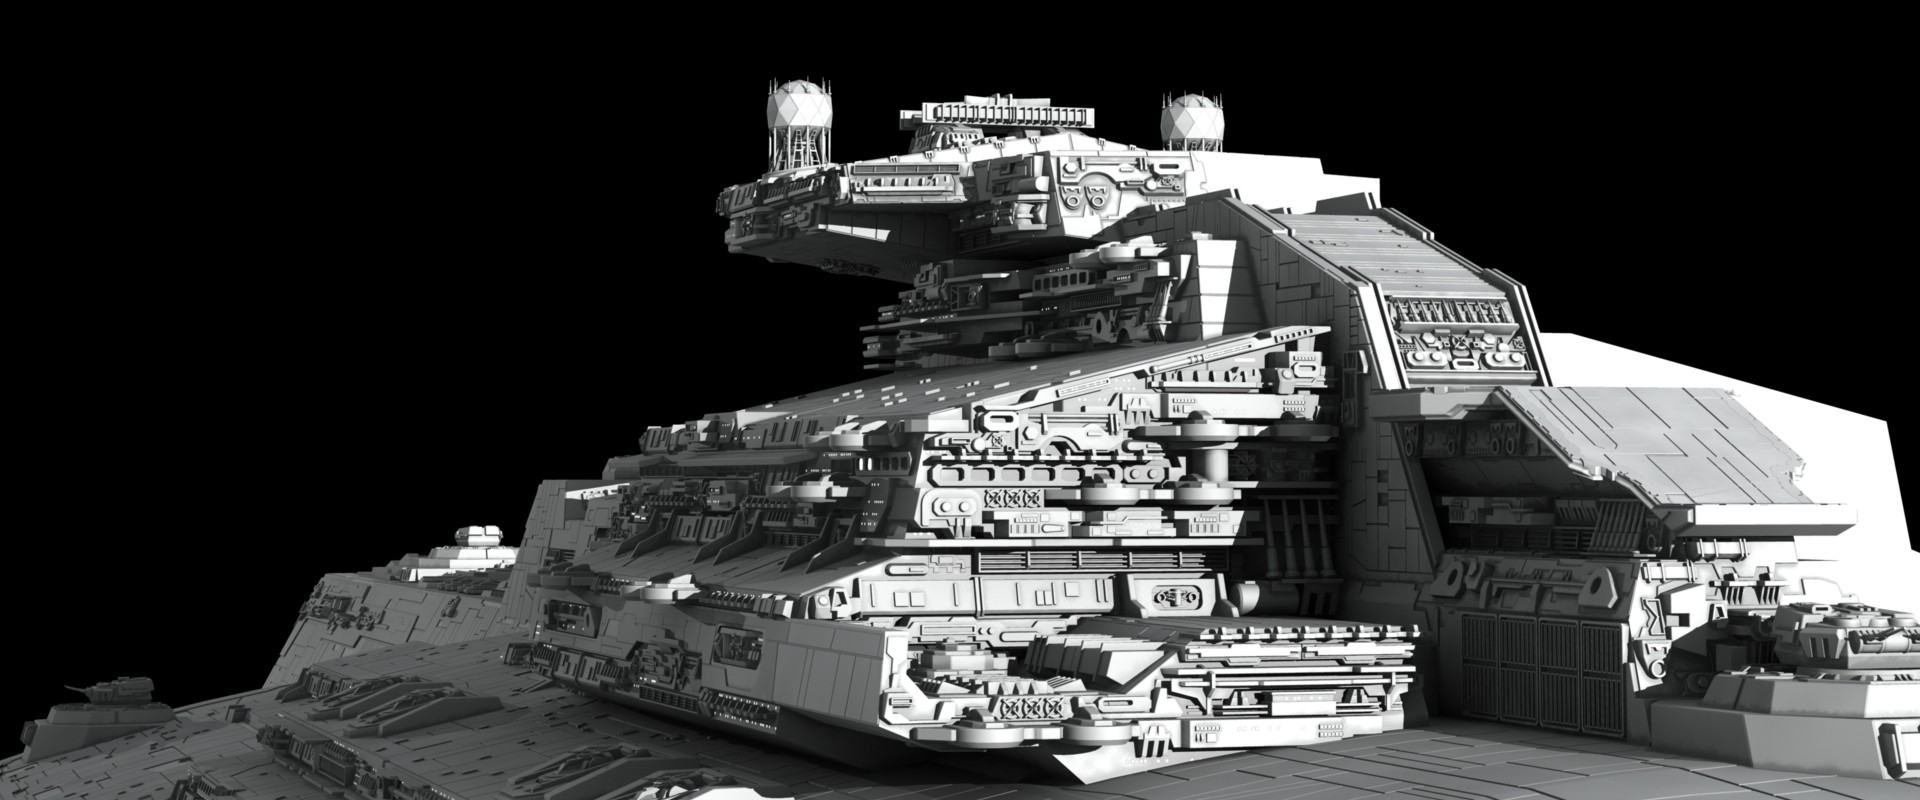 General 1920x800 Star Wars Star Destroyer Imperial Forces CGI digital art spaceship fractalsponge Star Wars Ships monochrome science fiction vehicle